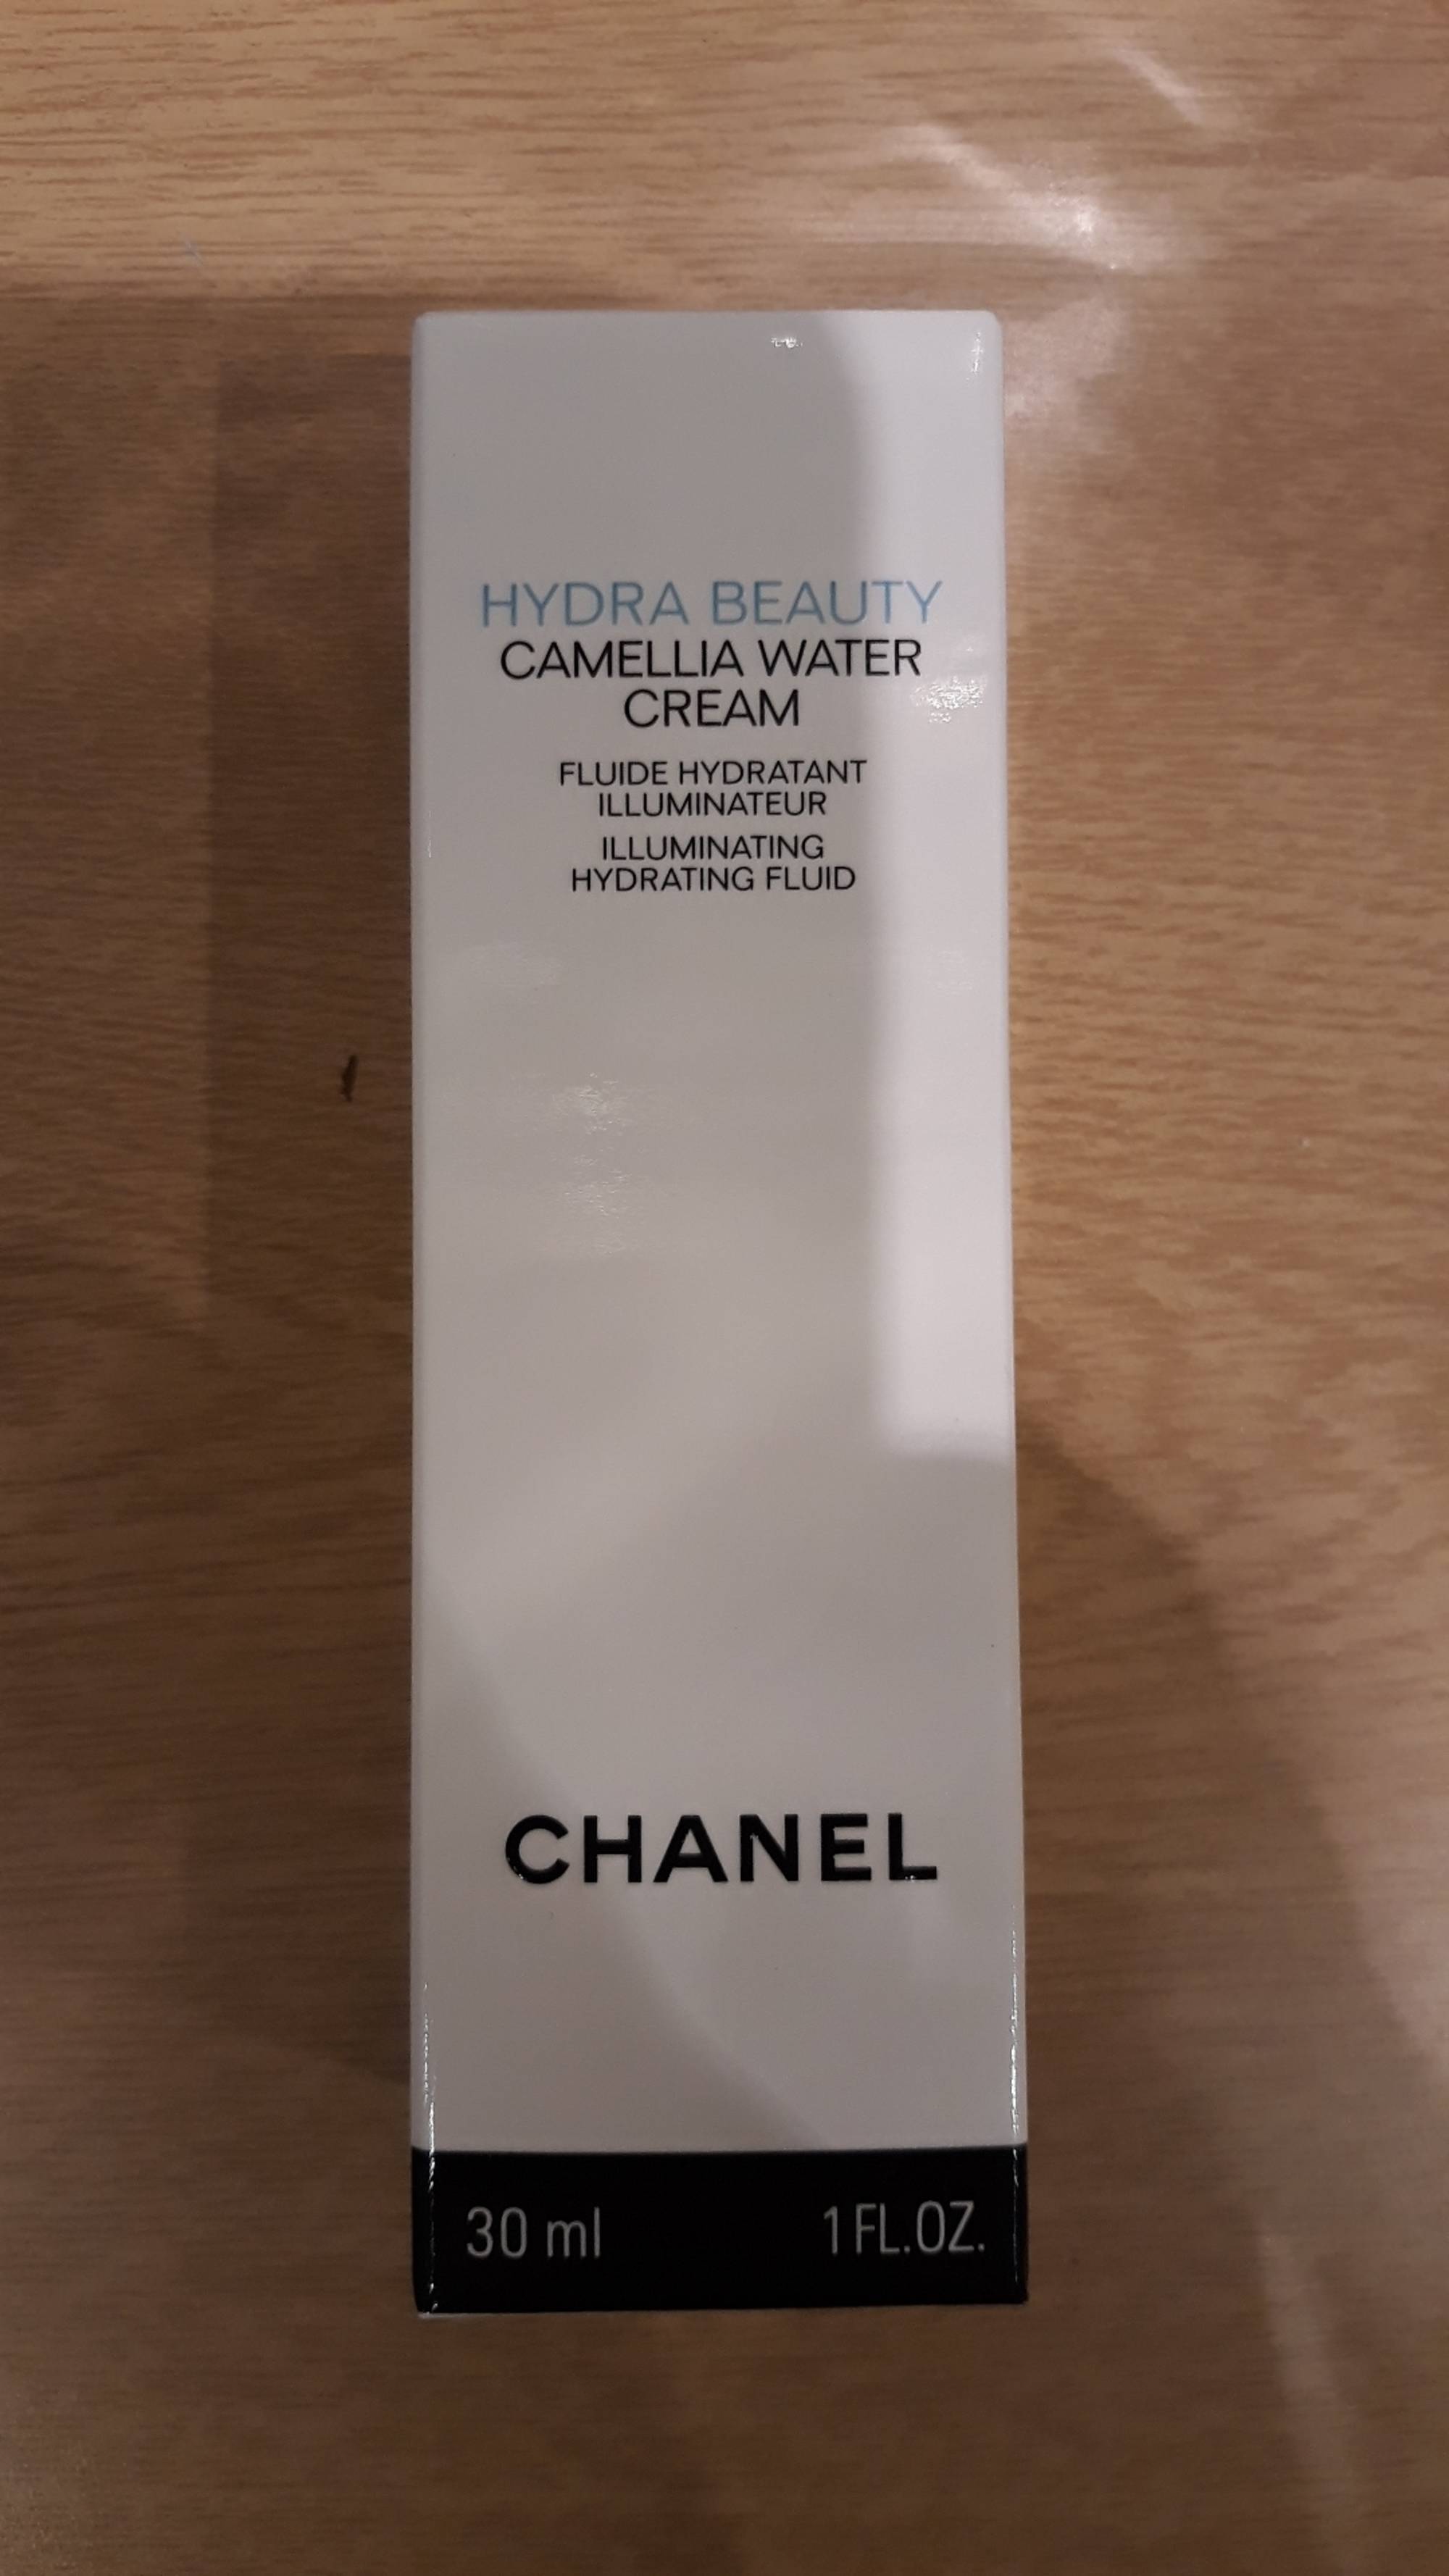 CHANEL - Hydra beauty camellia water cream - Fluide hydratant illuminateur